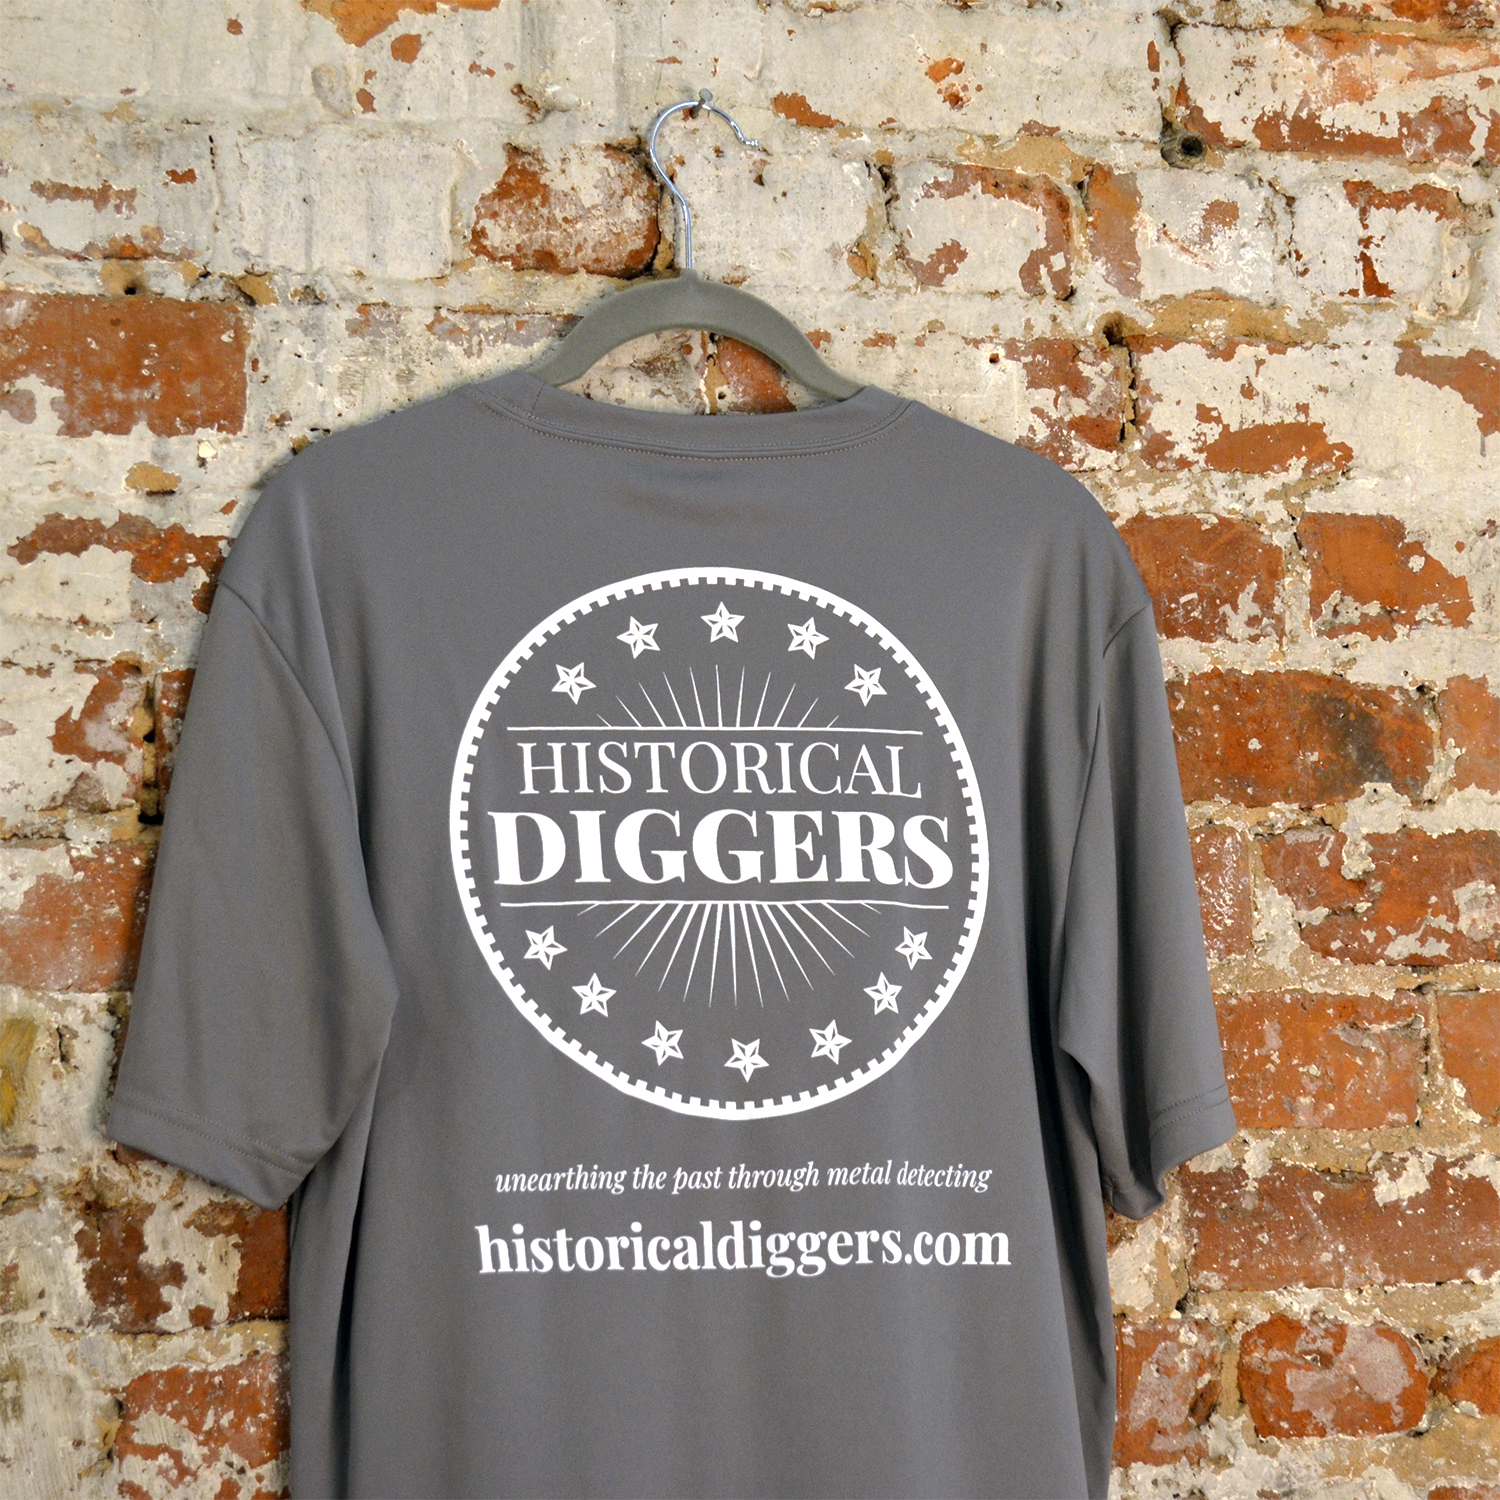 Historical Diggers T-shirt Design